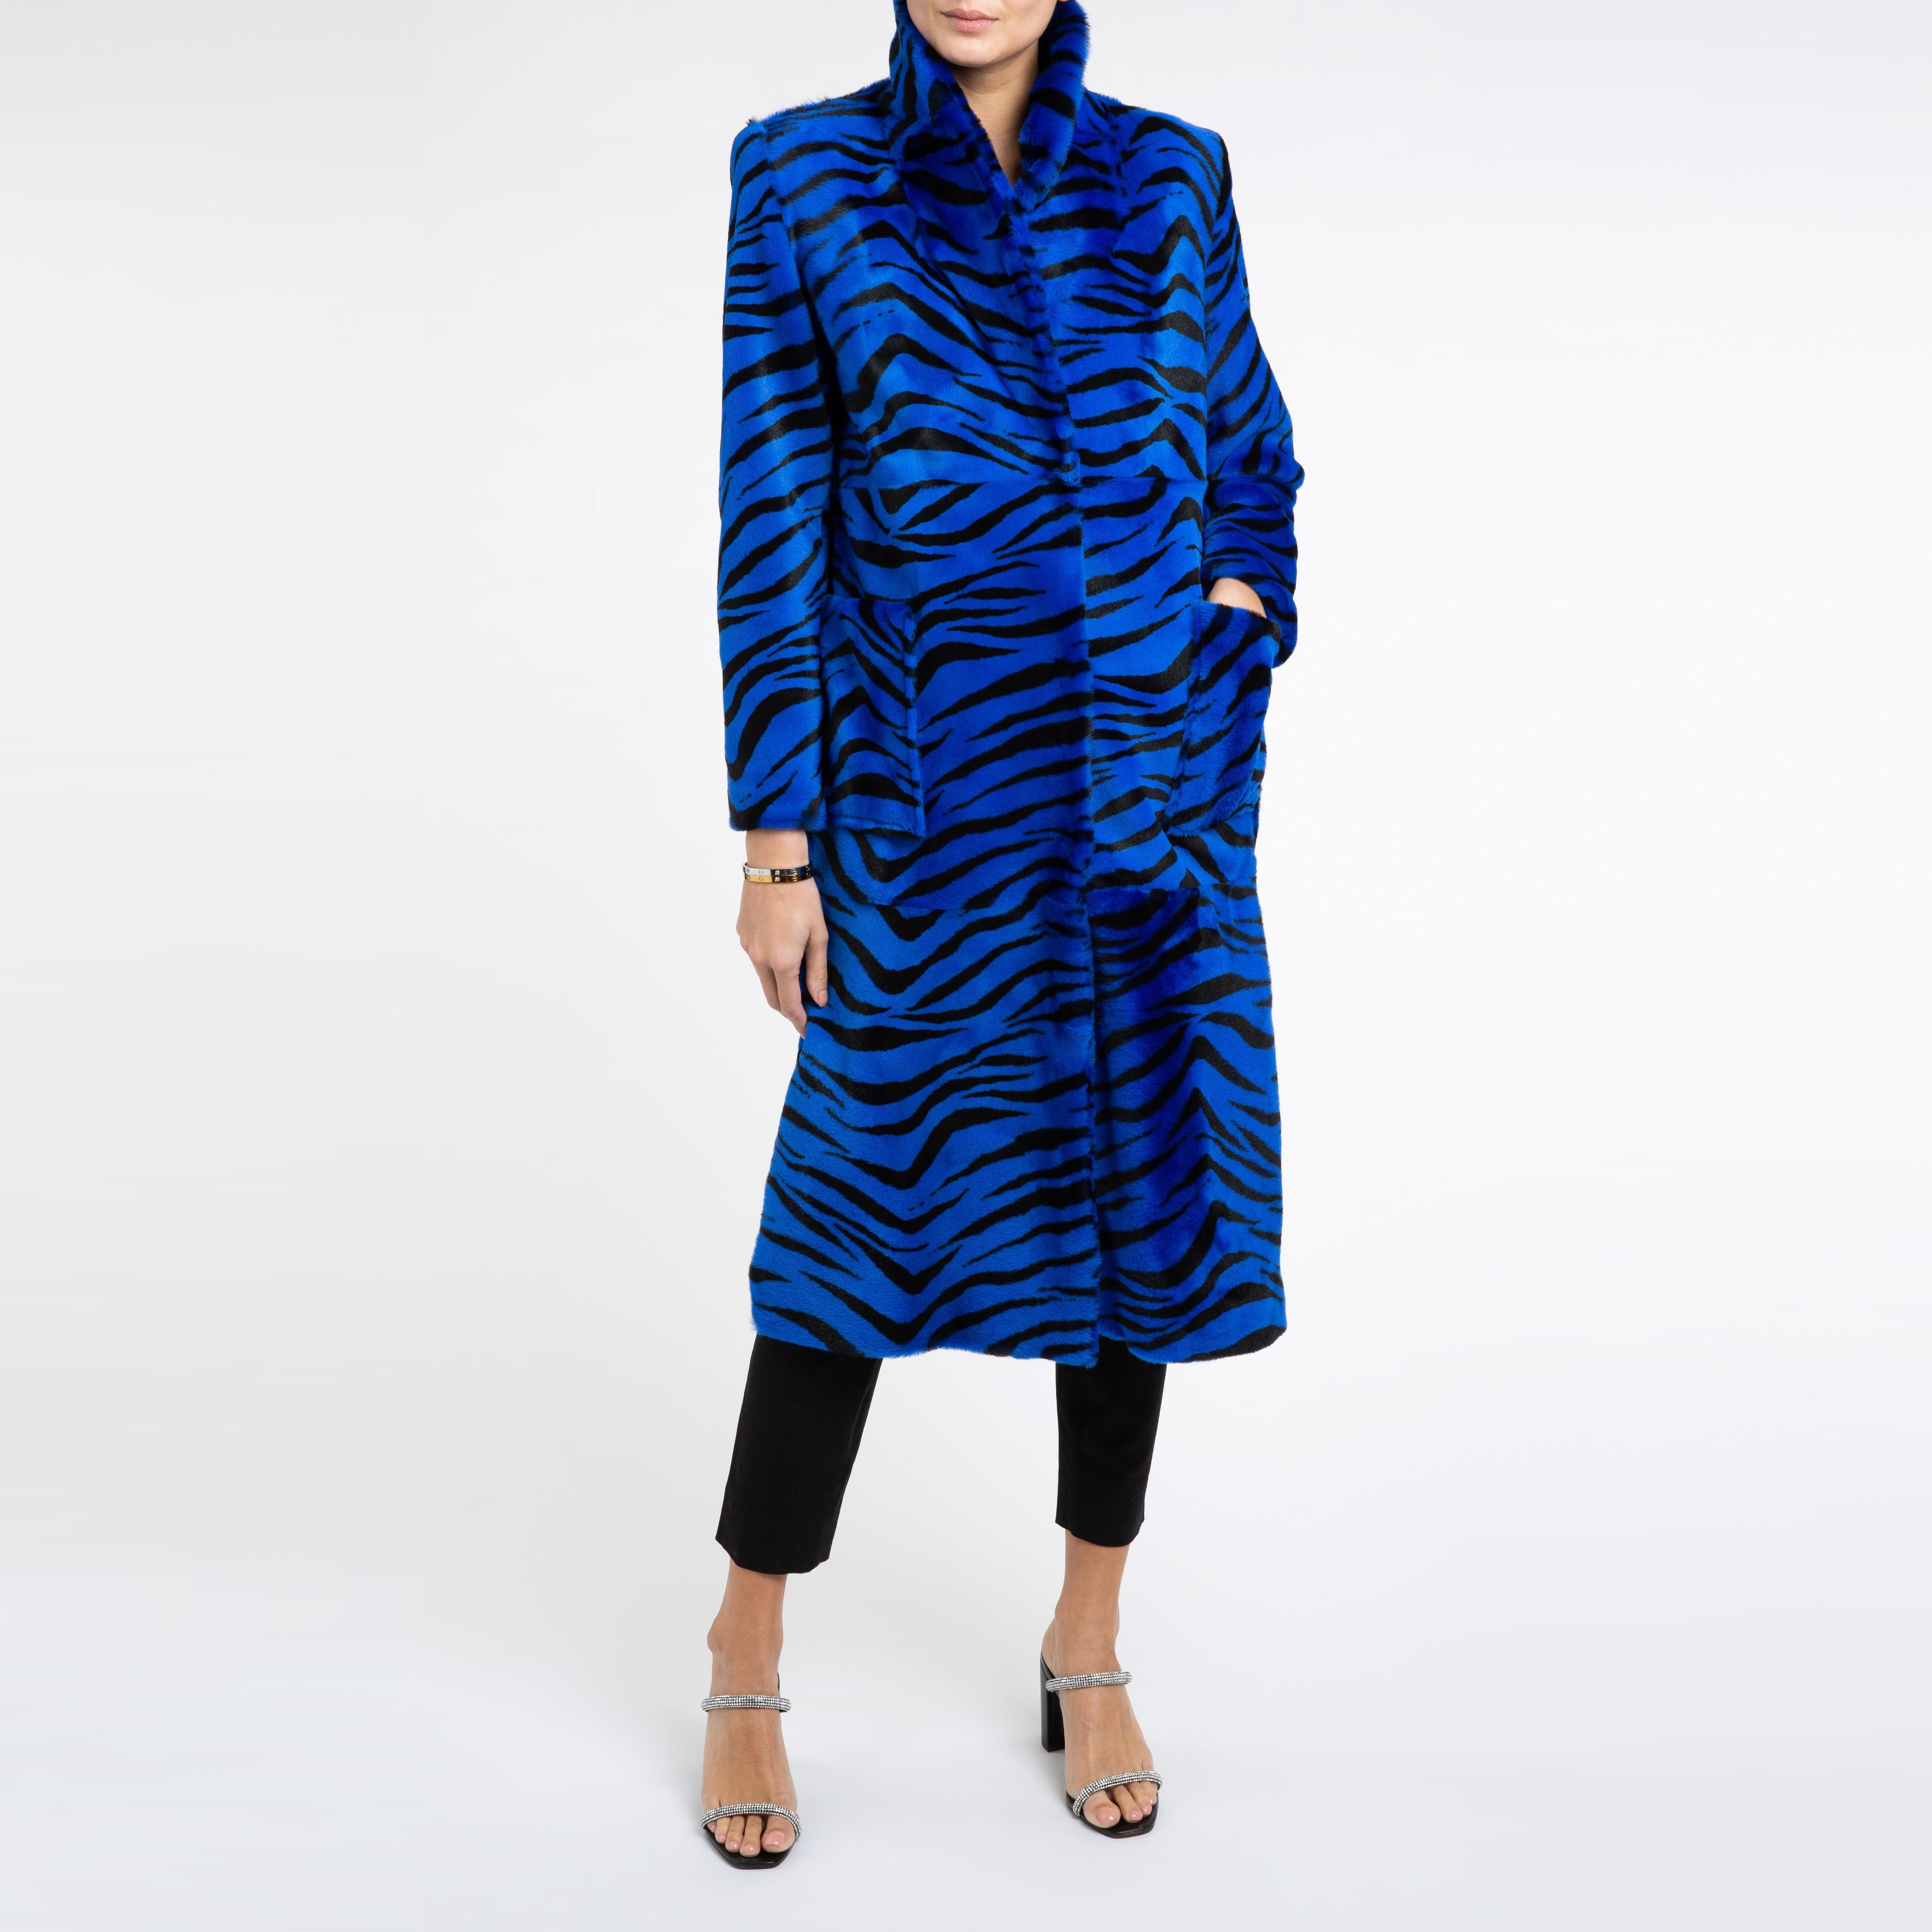 Verheyen London Shearling Coat in Blue Zebra Print size uk 8-10 For Sale 5